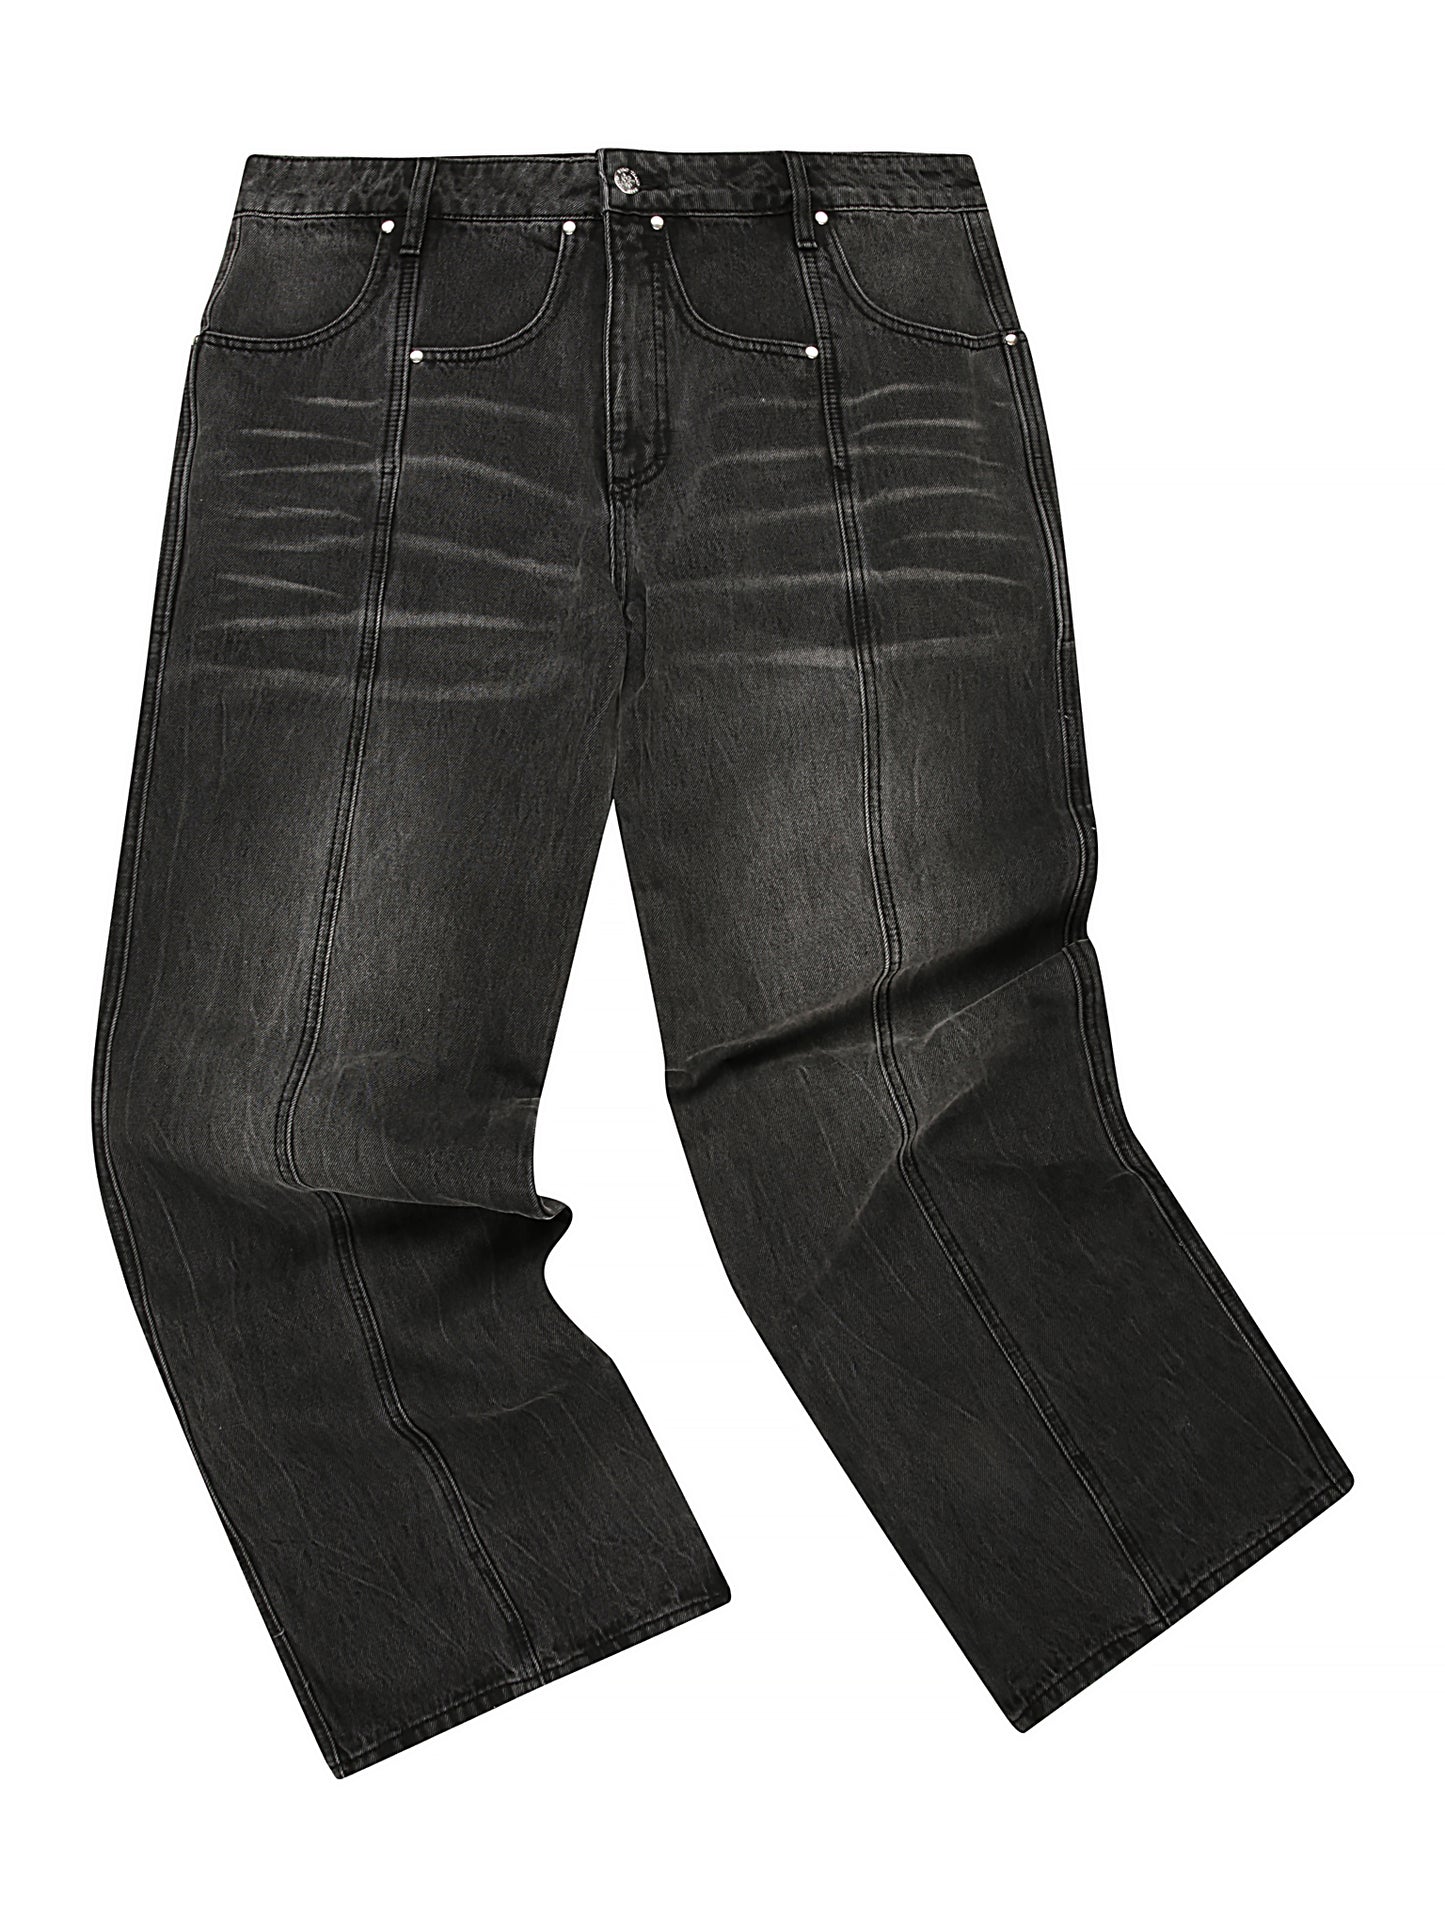 Ramp Tramp 8-pocket jeans